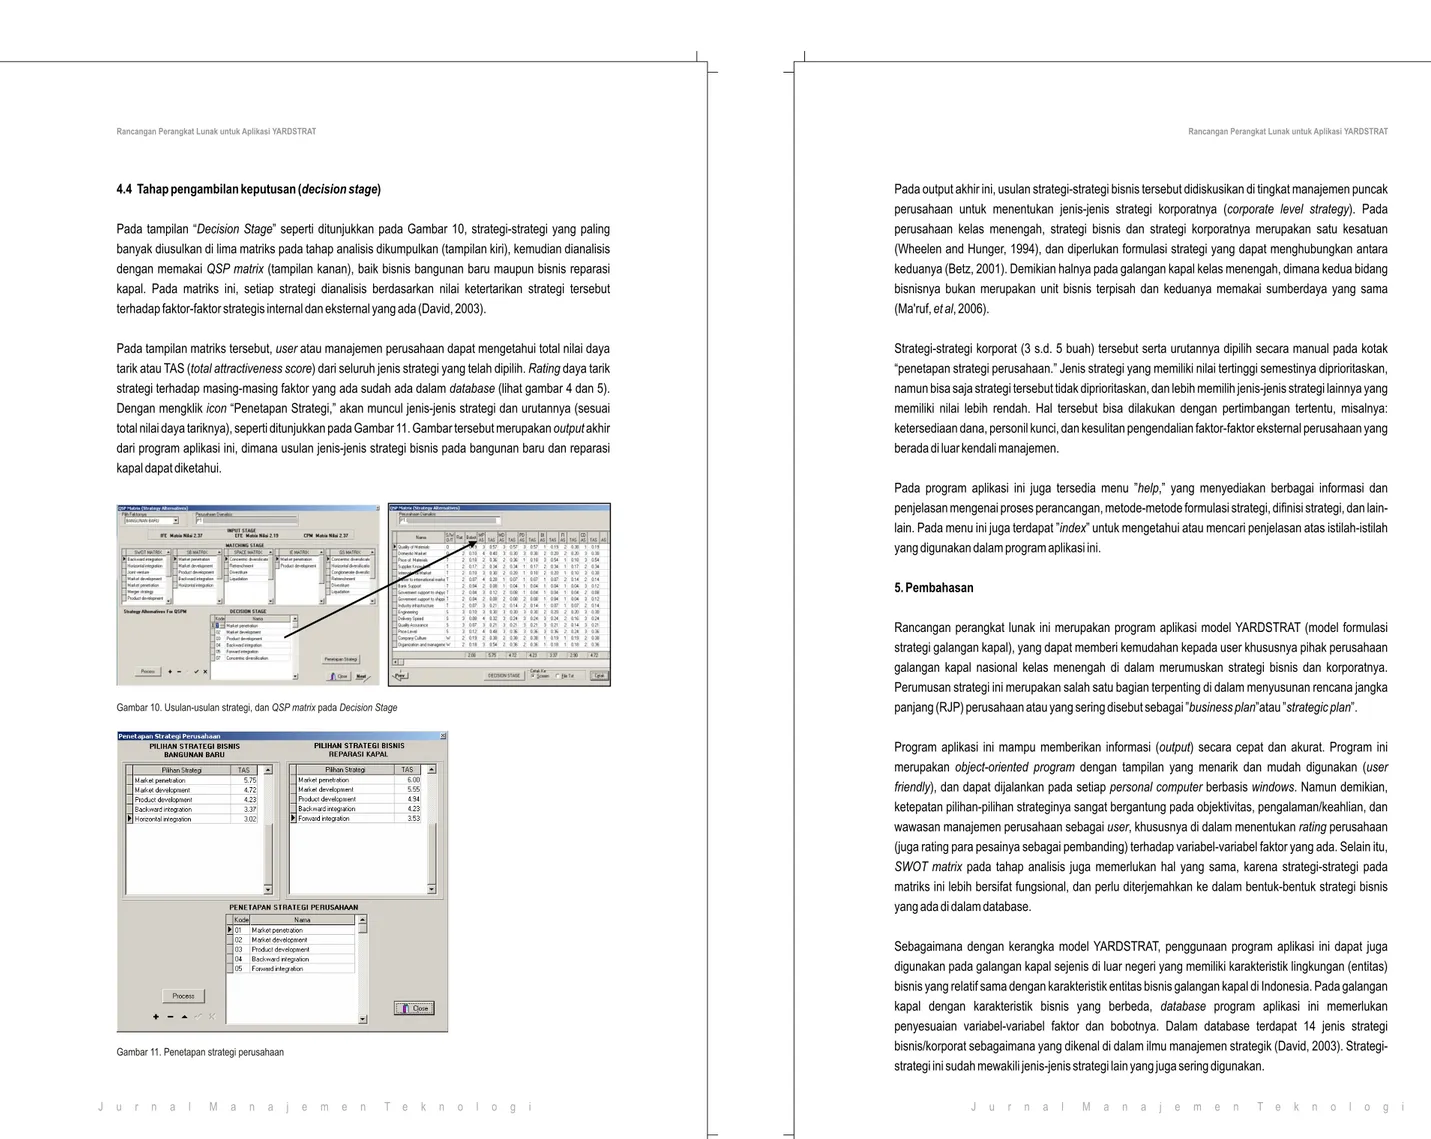 Gambar  10.  Usulan-usulan  strategi,  dan  QSP  matrix  pada  Decision  Stage